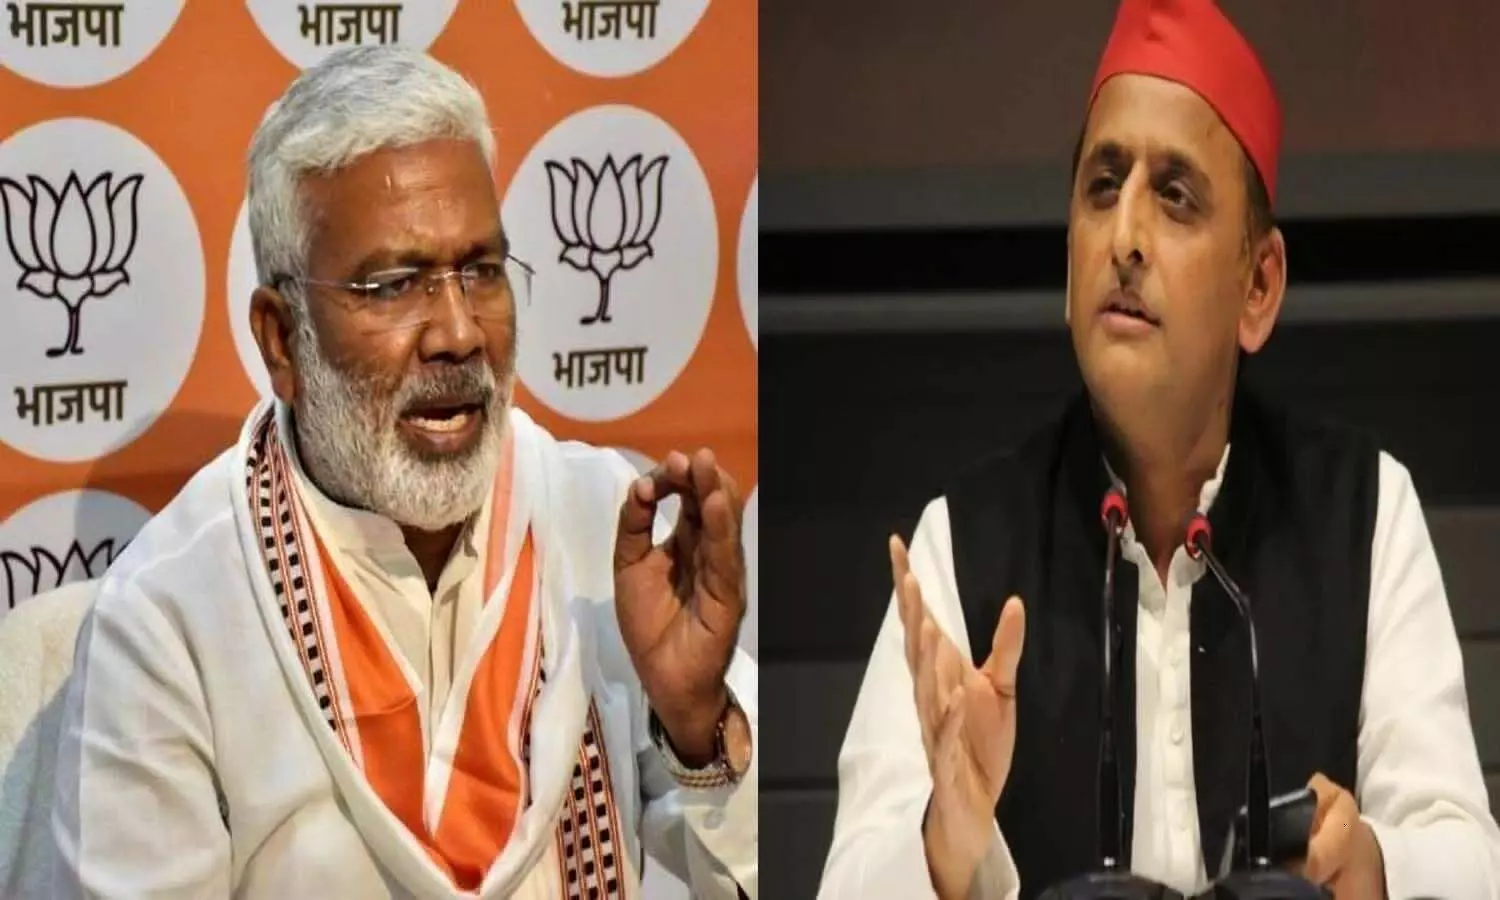 UP Politics: BJPs biggest attack on Akhilesh so far, called Ghajini and Gori